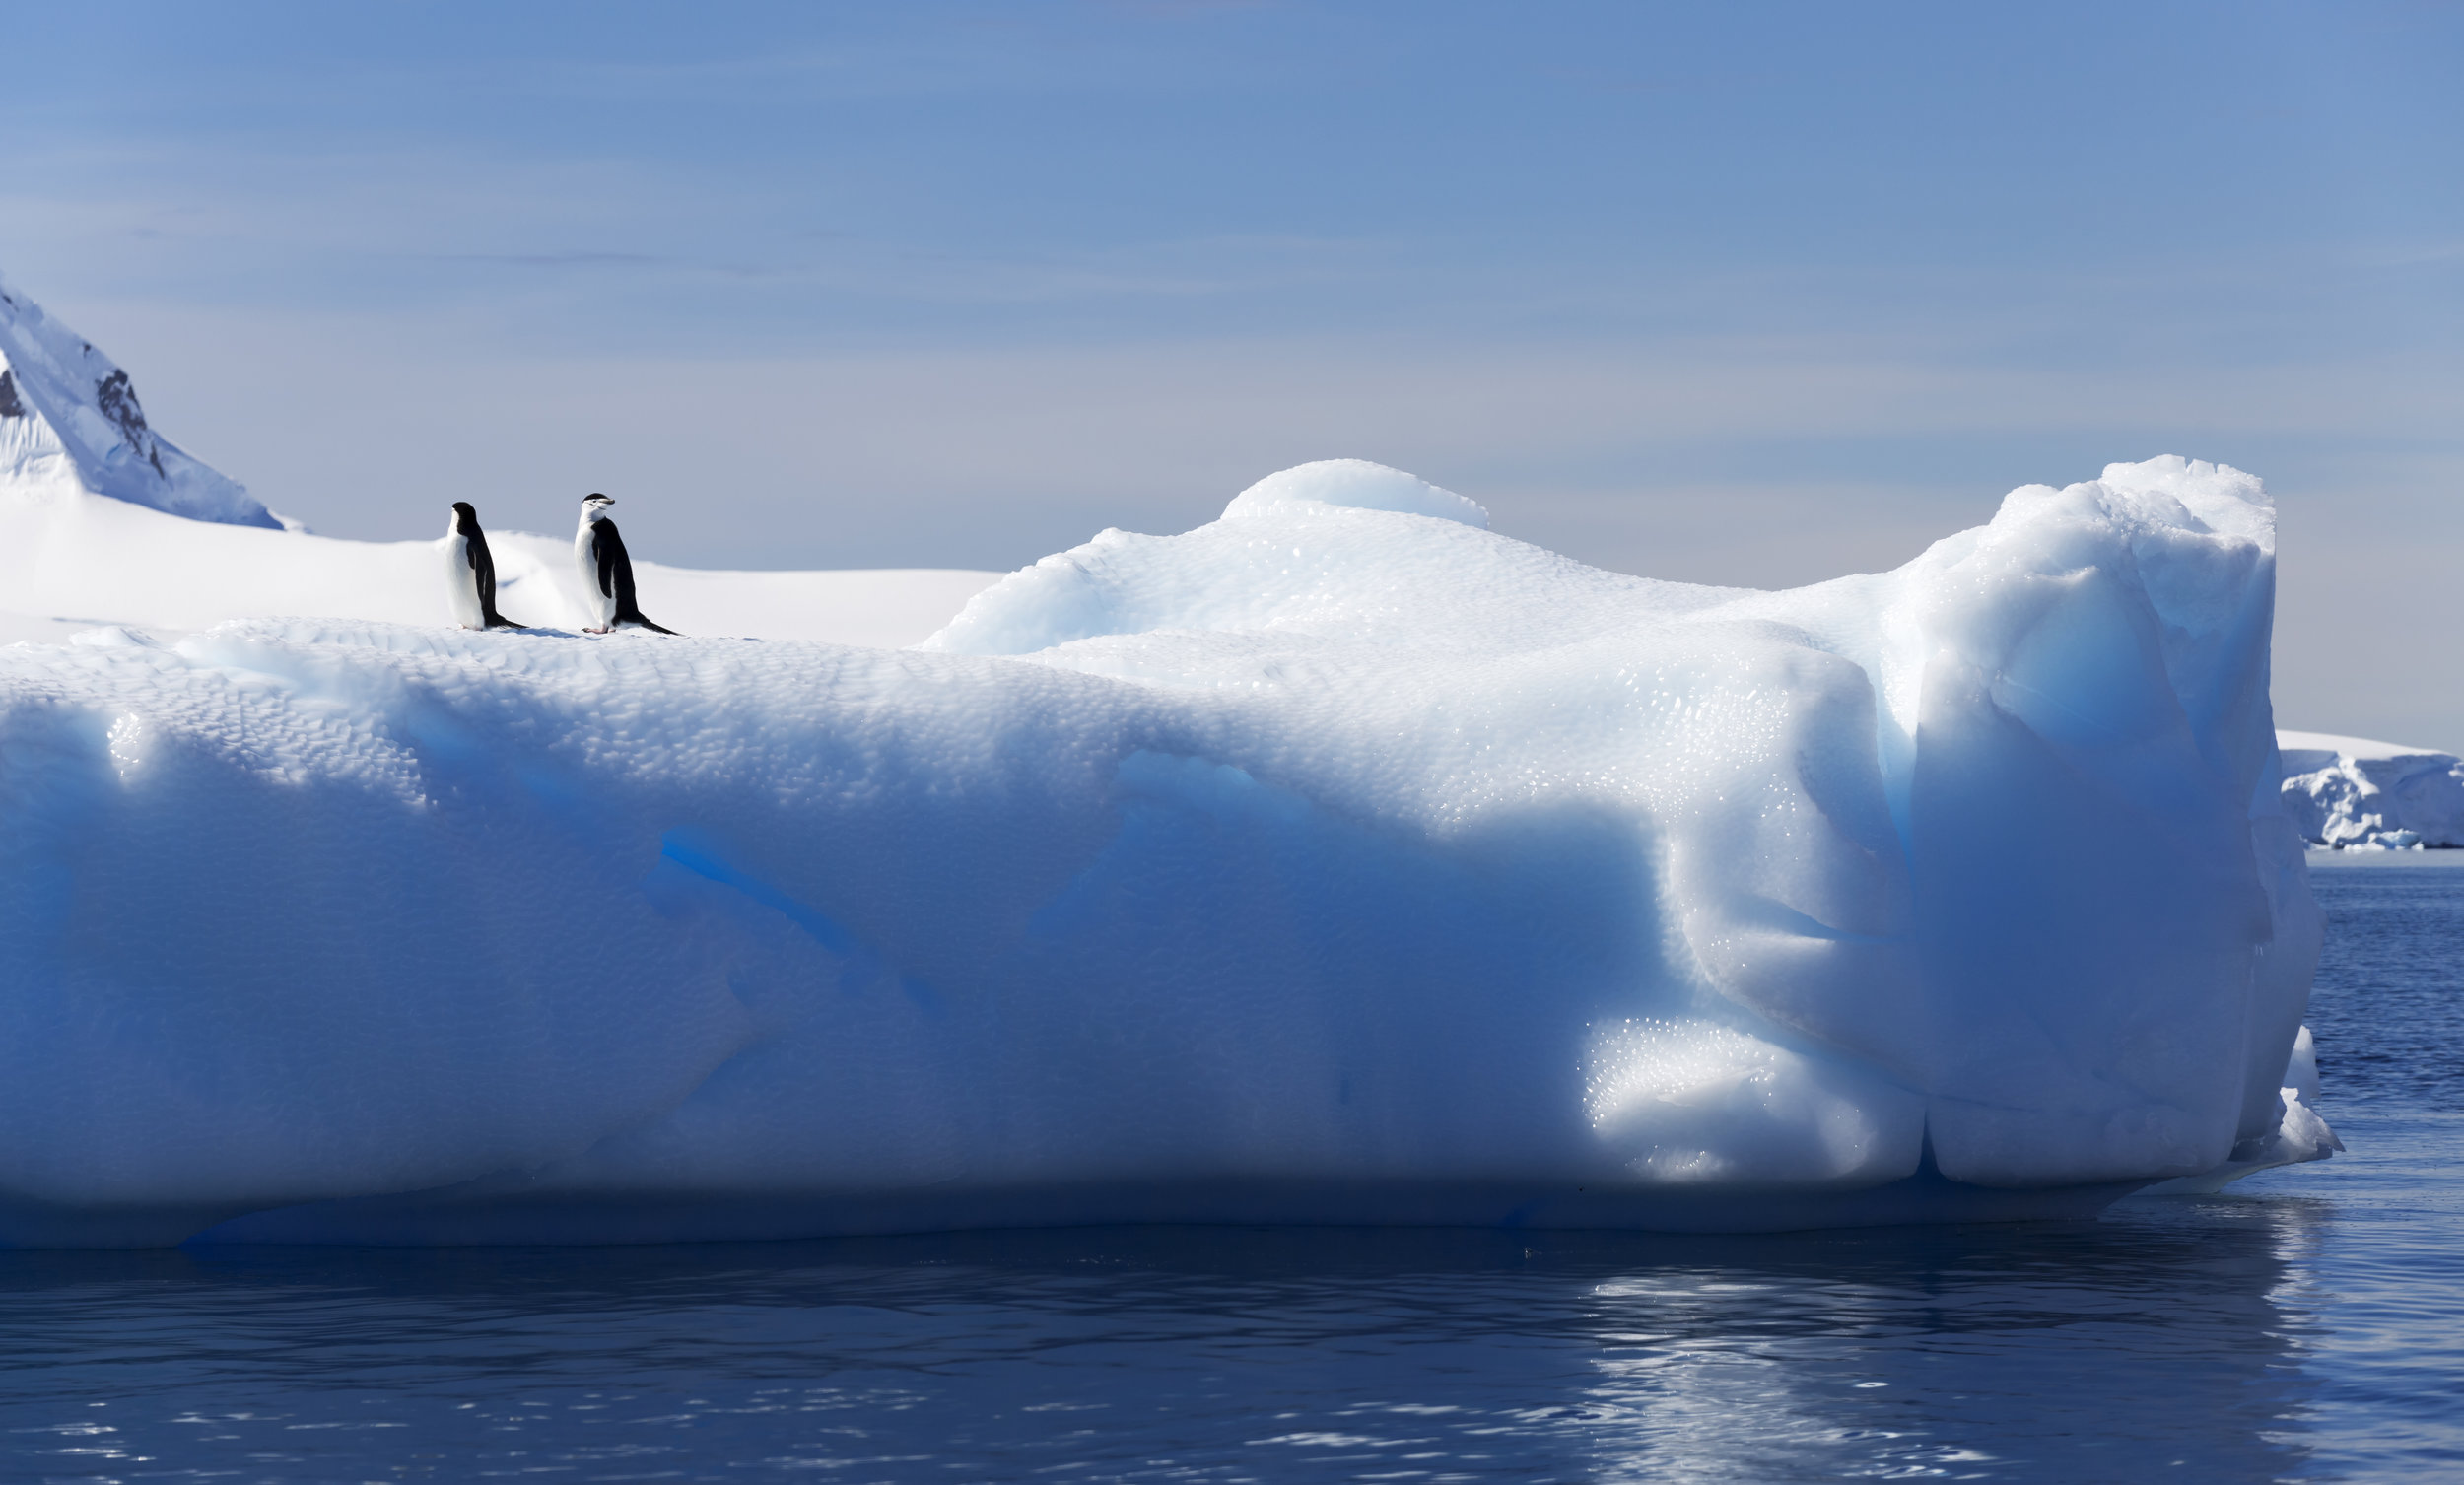  Cool, Penguins!   Arctic Travel    Start Designing  